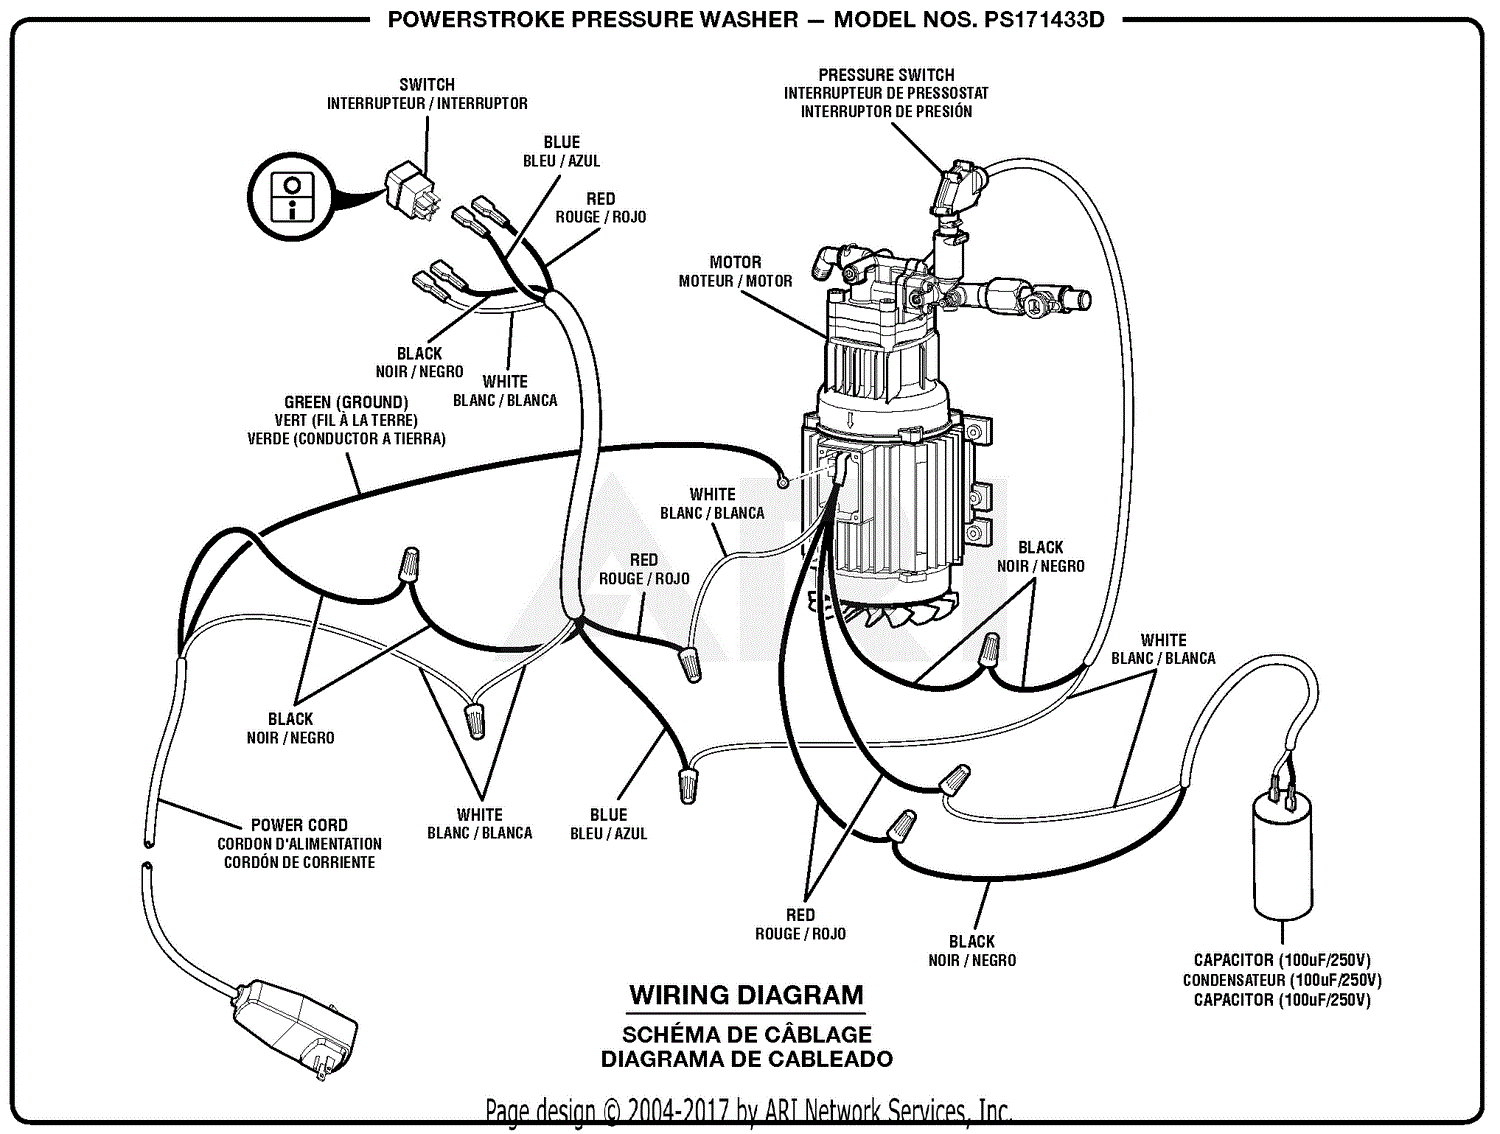 Washing Machine Motor Wiring Diagram Pdf from az417944.vo.msecnd.net